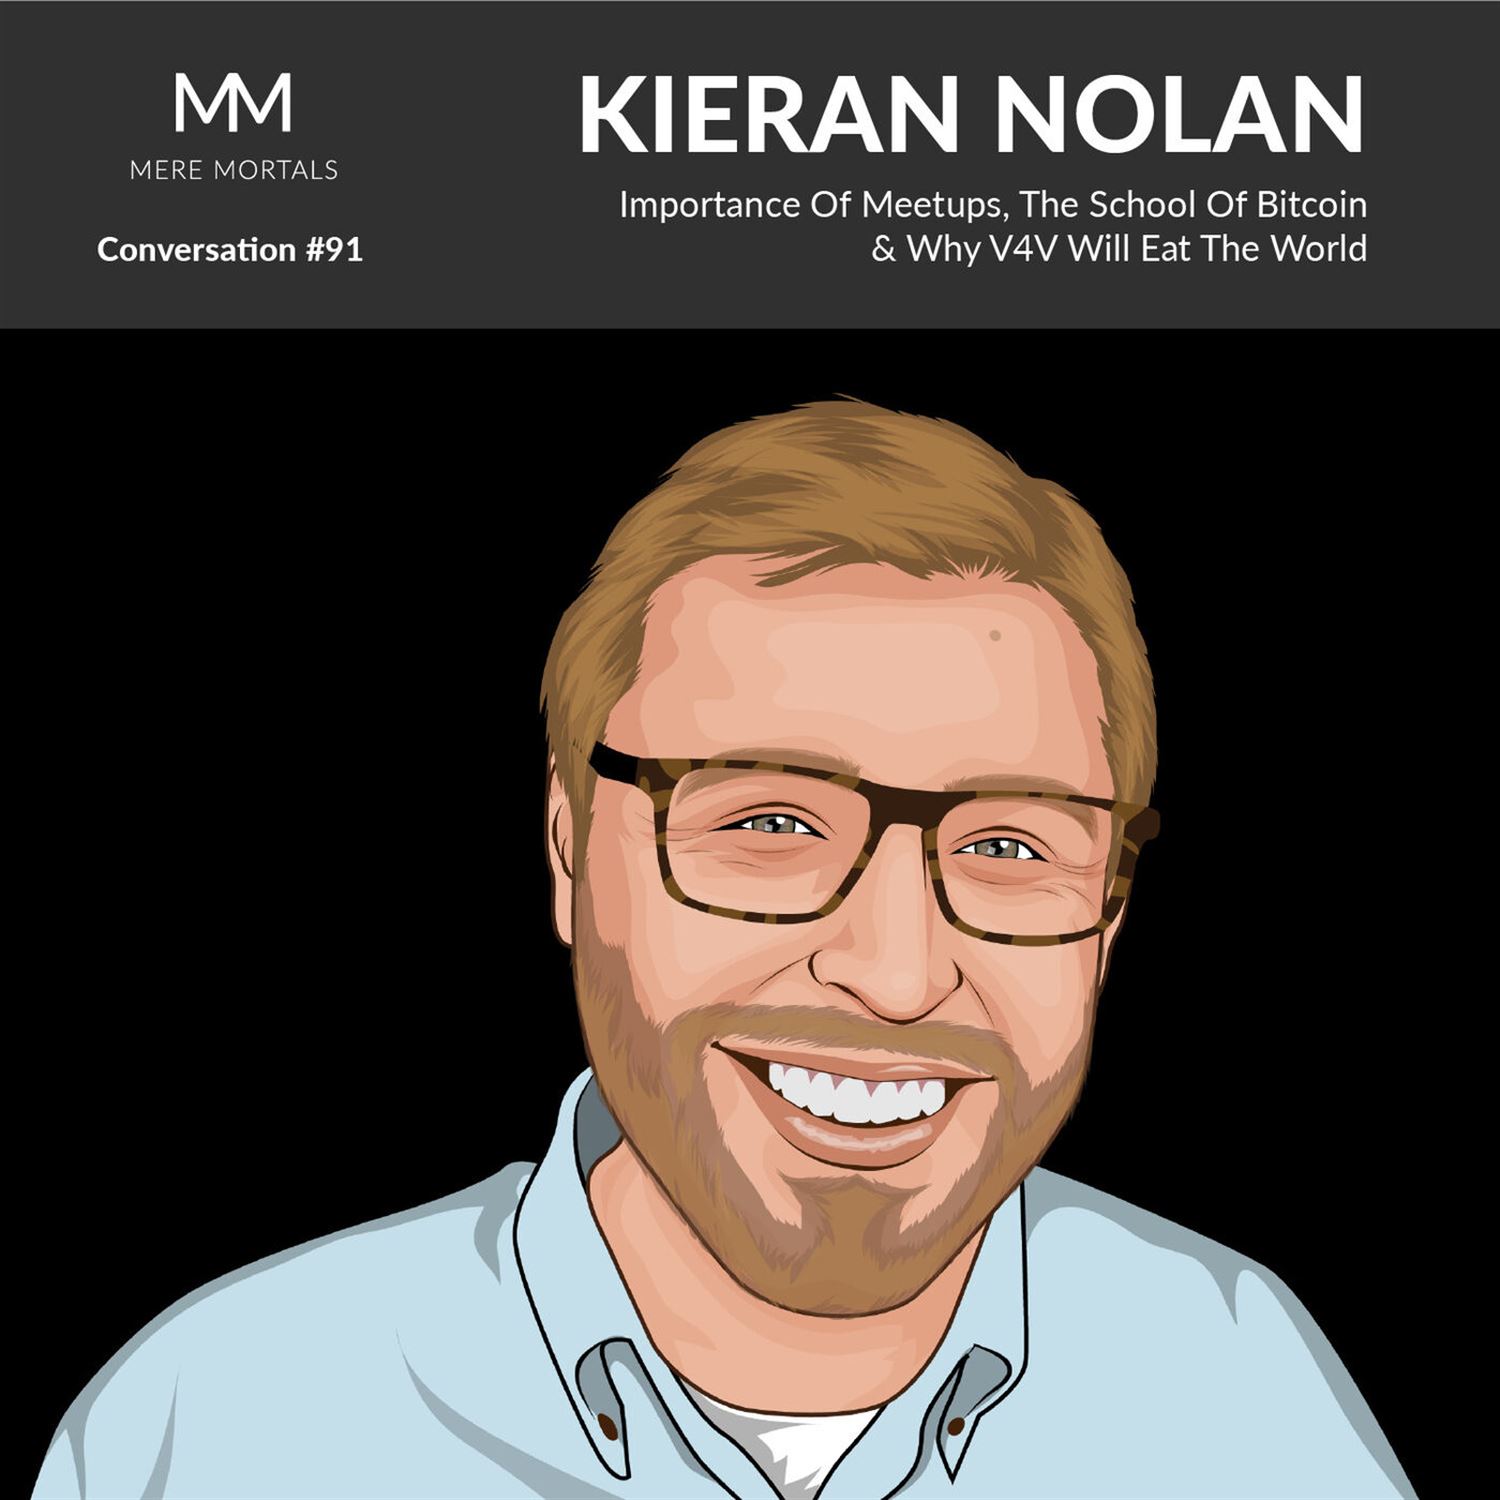 KIERAN NOLAN | Importance Of Meetups, The School Of Bitcoin & Why V4V Will Eat The World